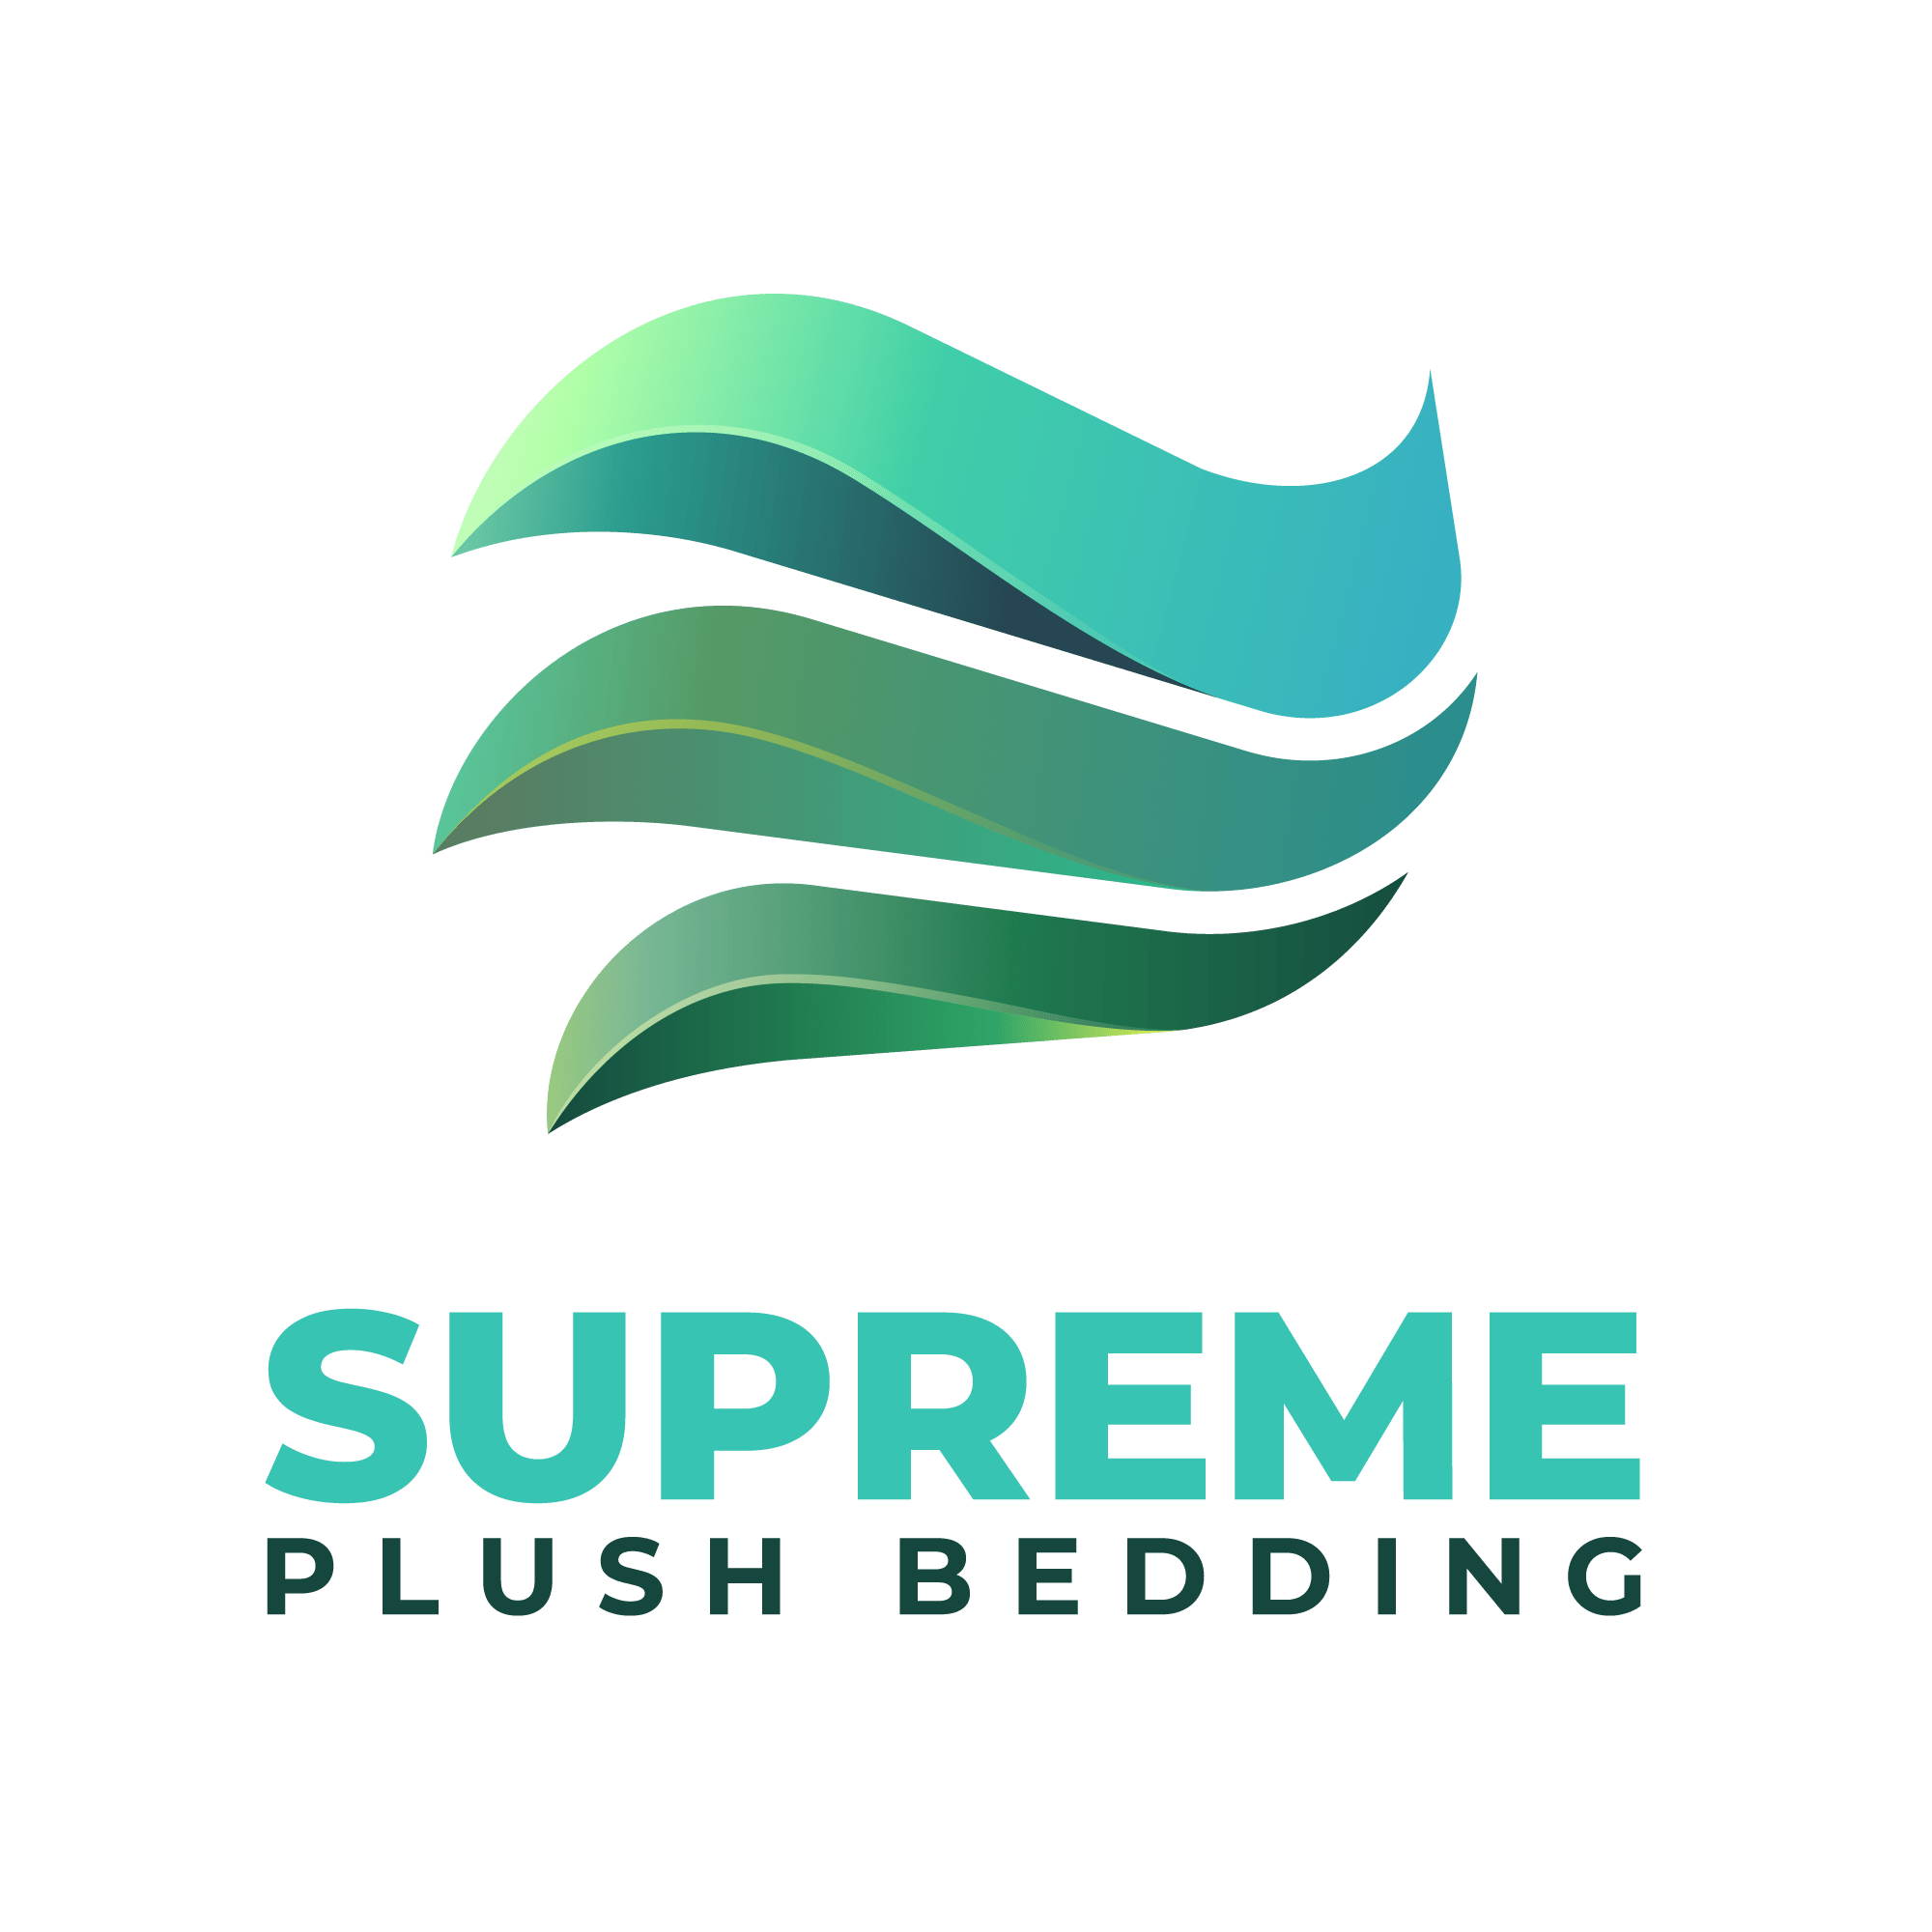 Supreme Plush Bedding